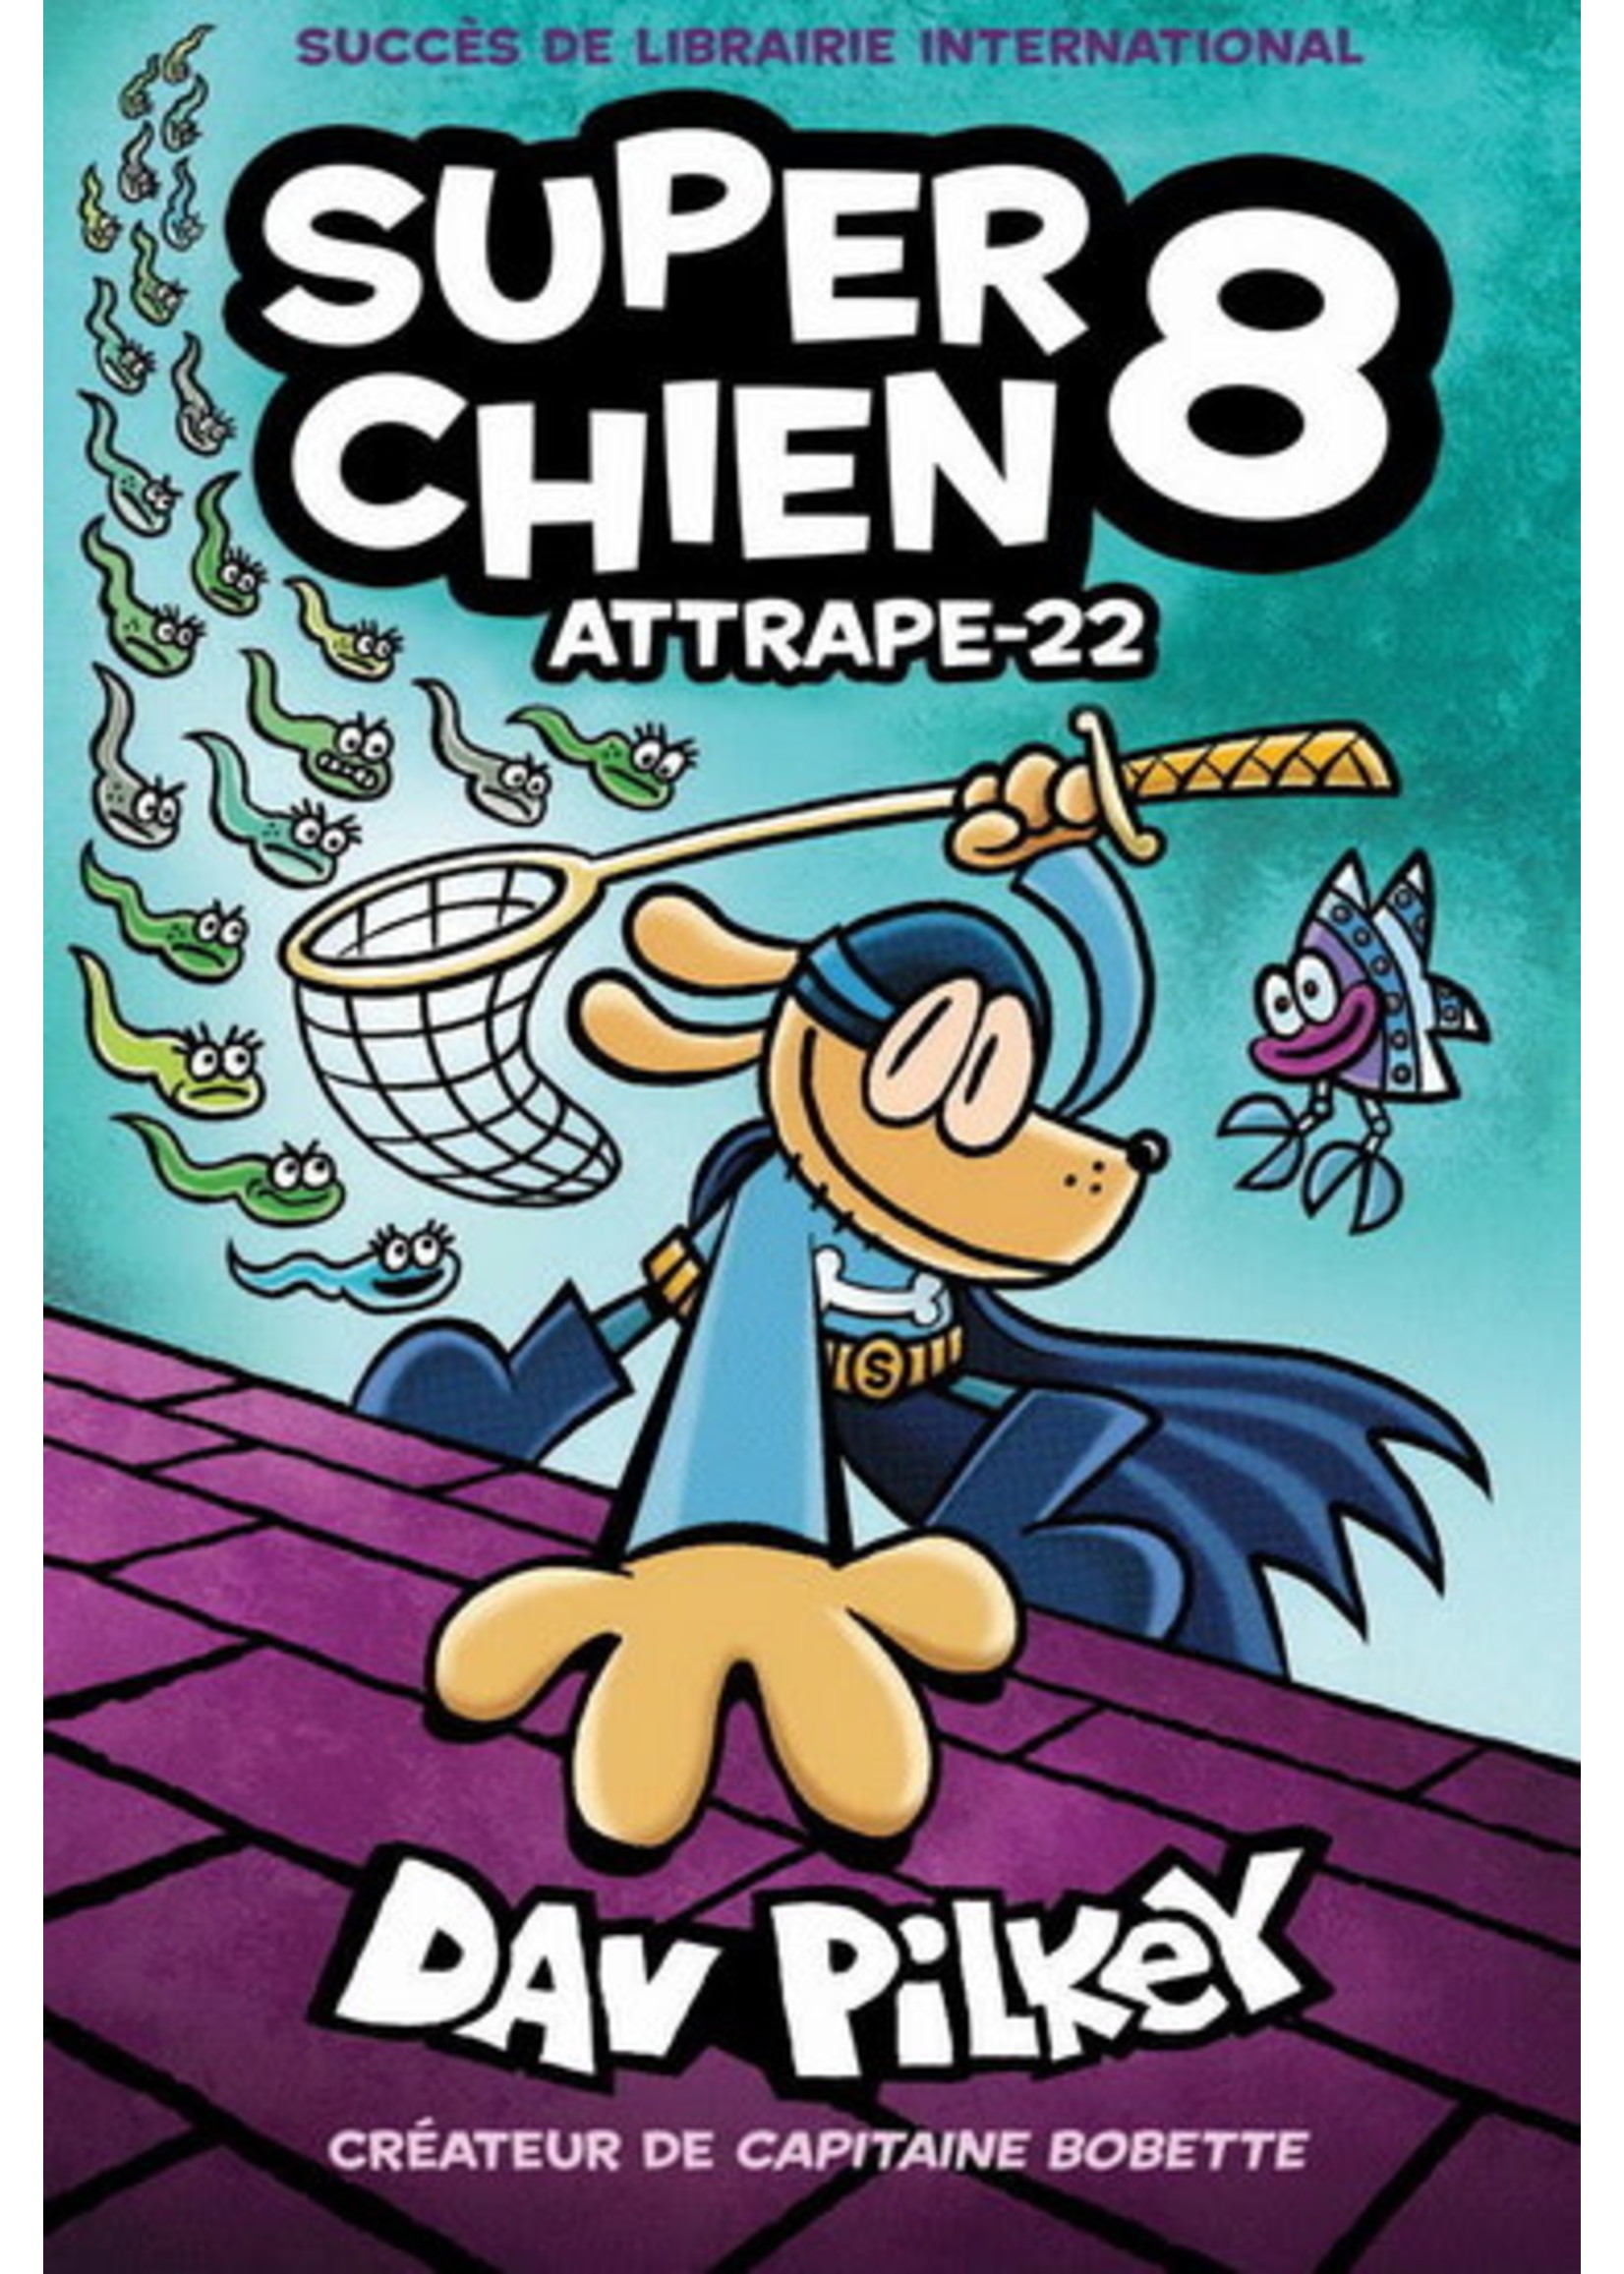 Attrape-22 (Super Chien #08) by Dav Pilkey